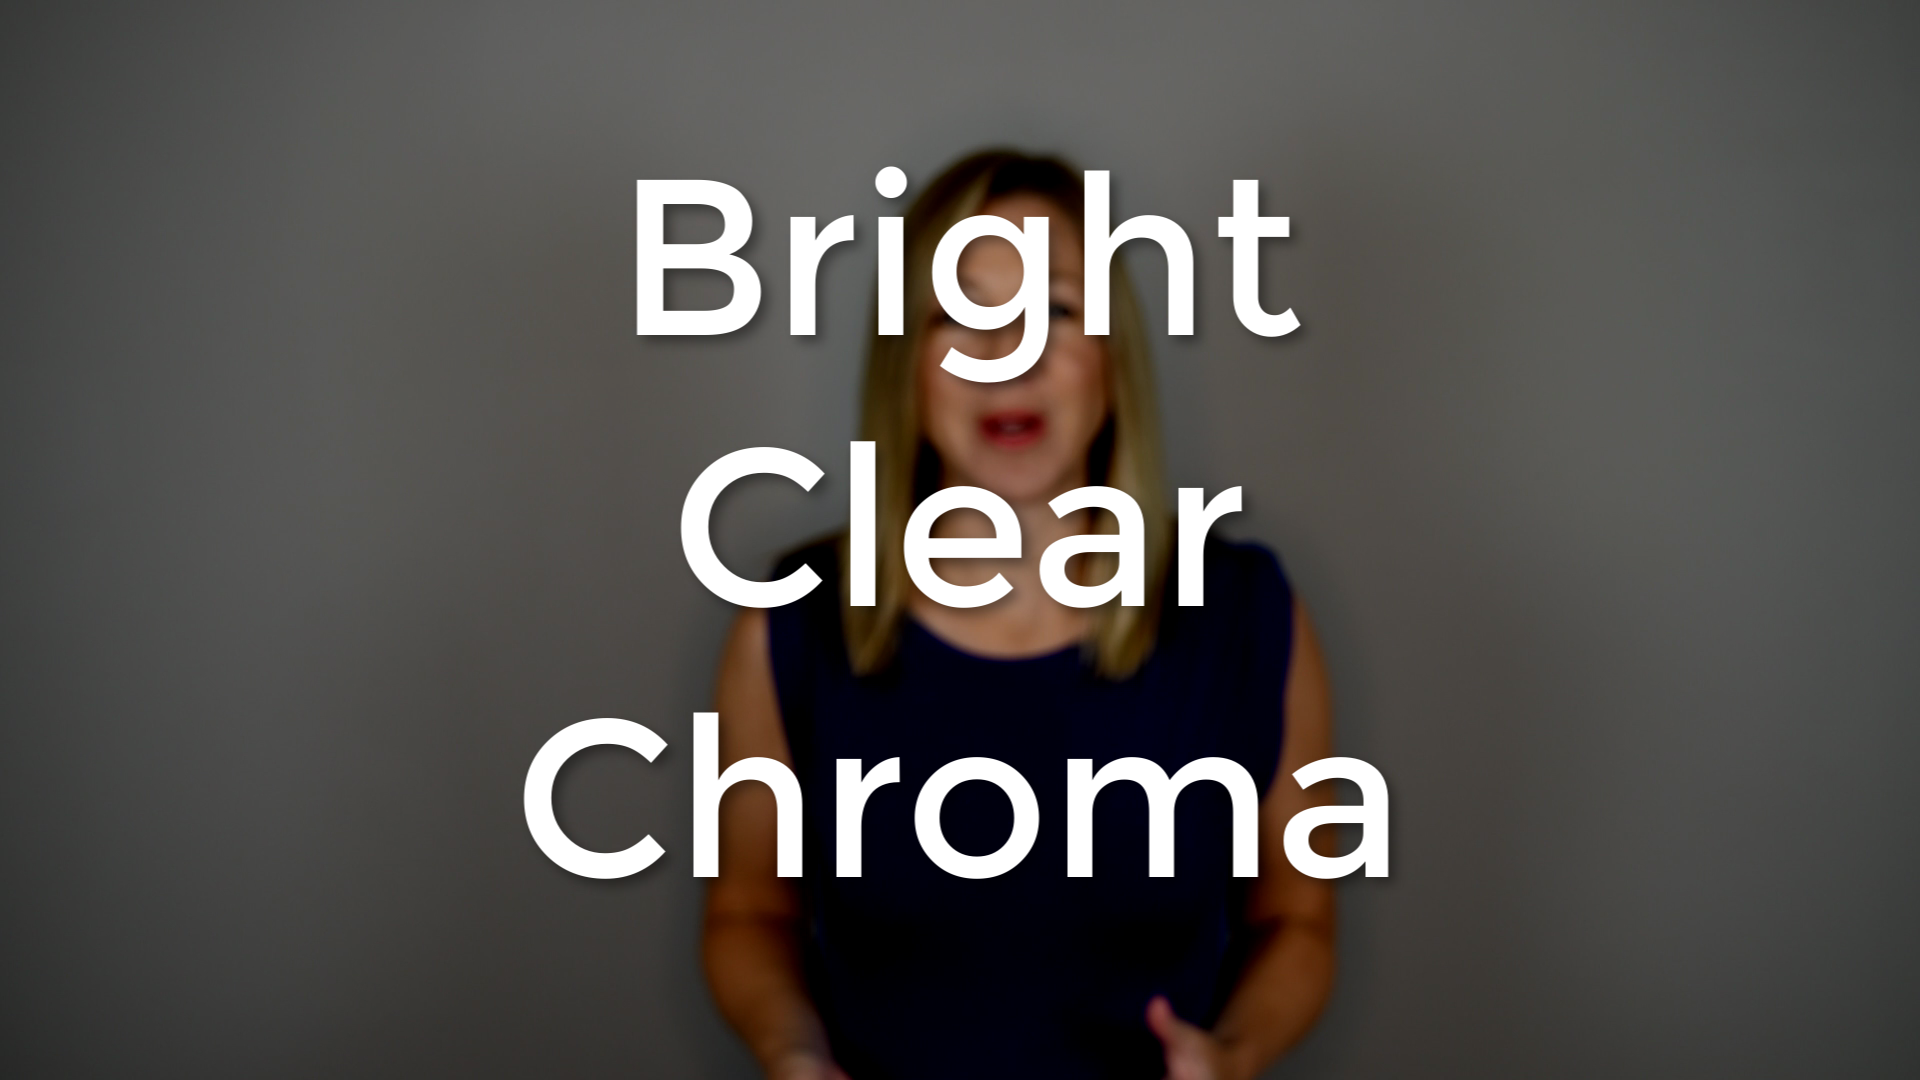 Bright, Clear, Chroma?